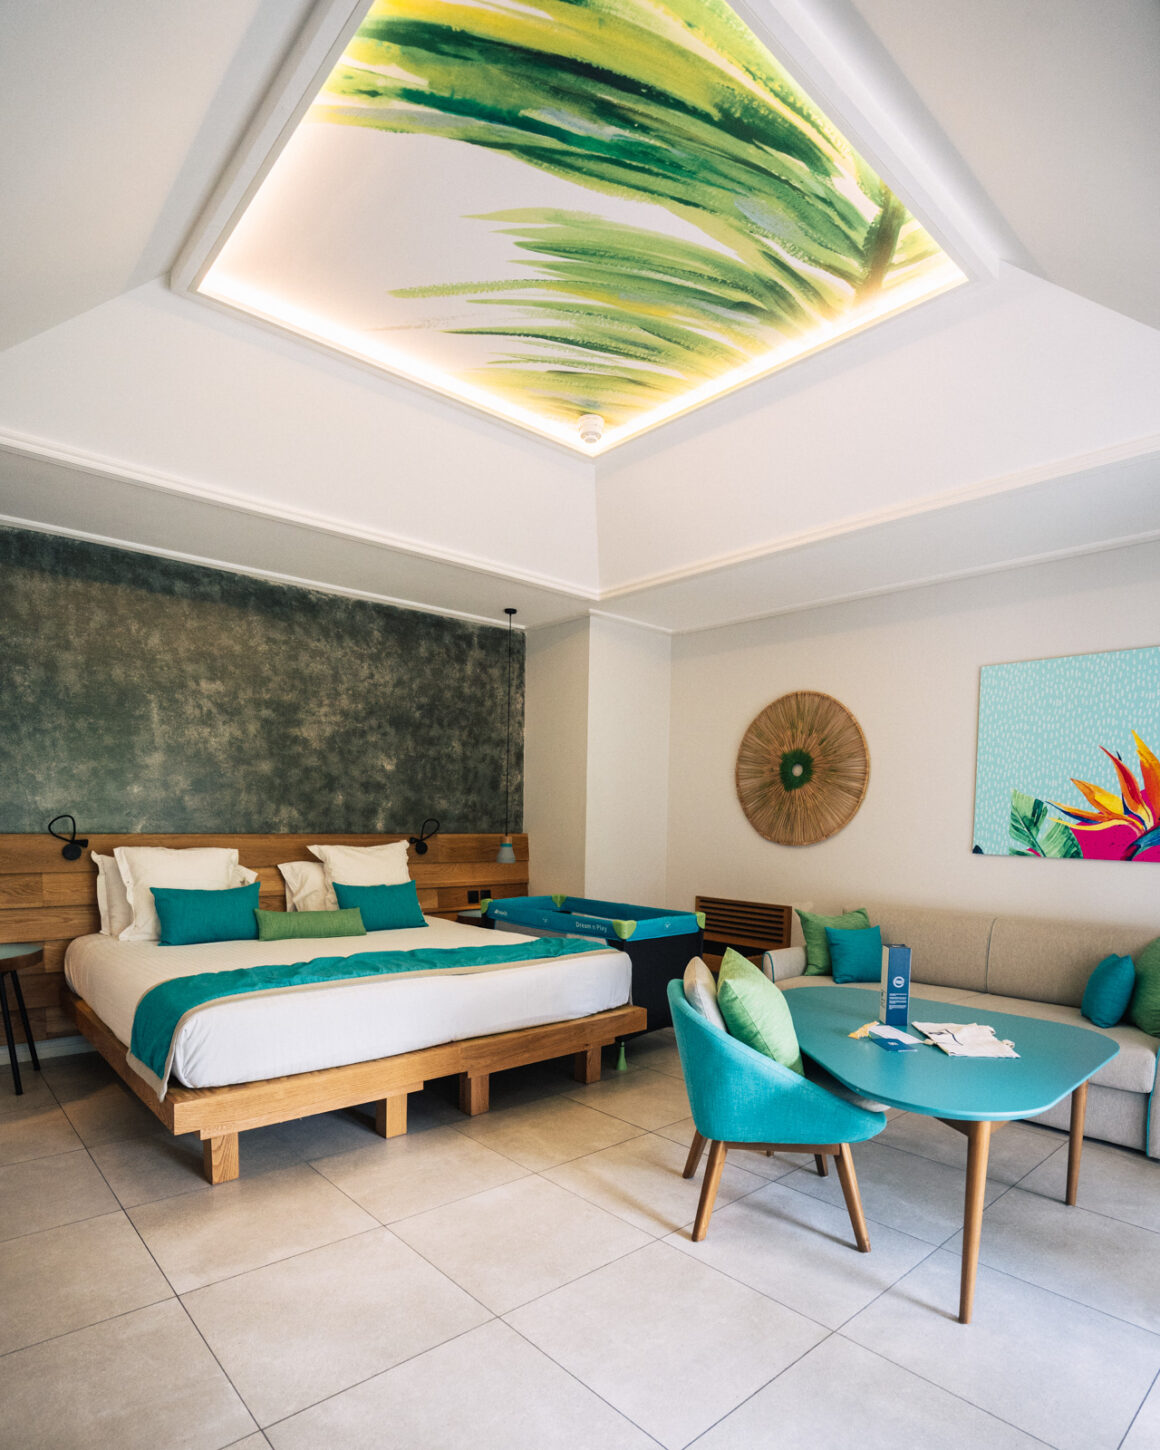 Club Med Seychellen, Hotelbeschreibung, Zimmer